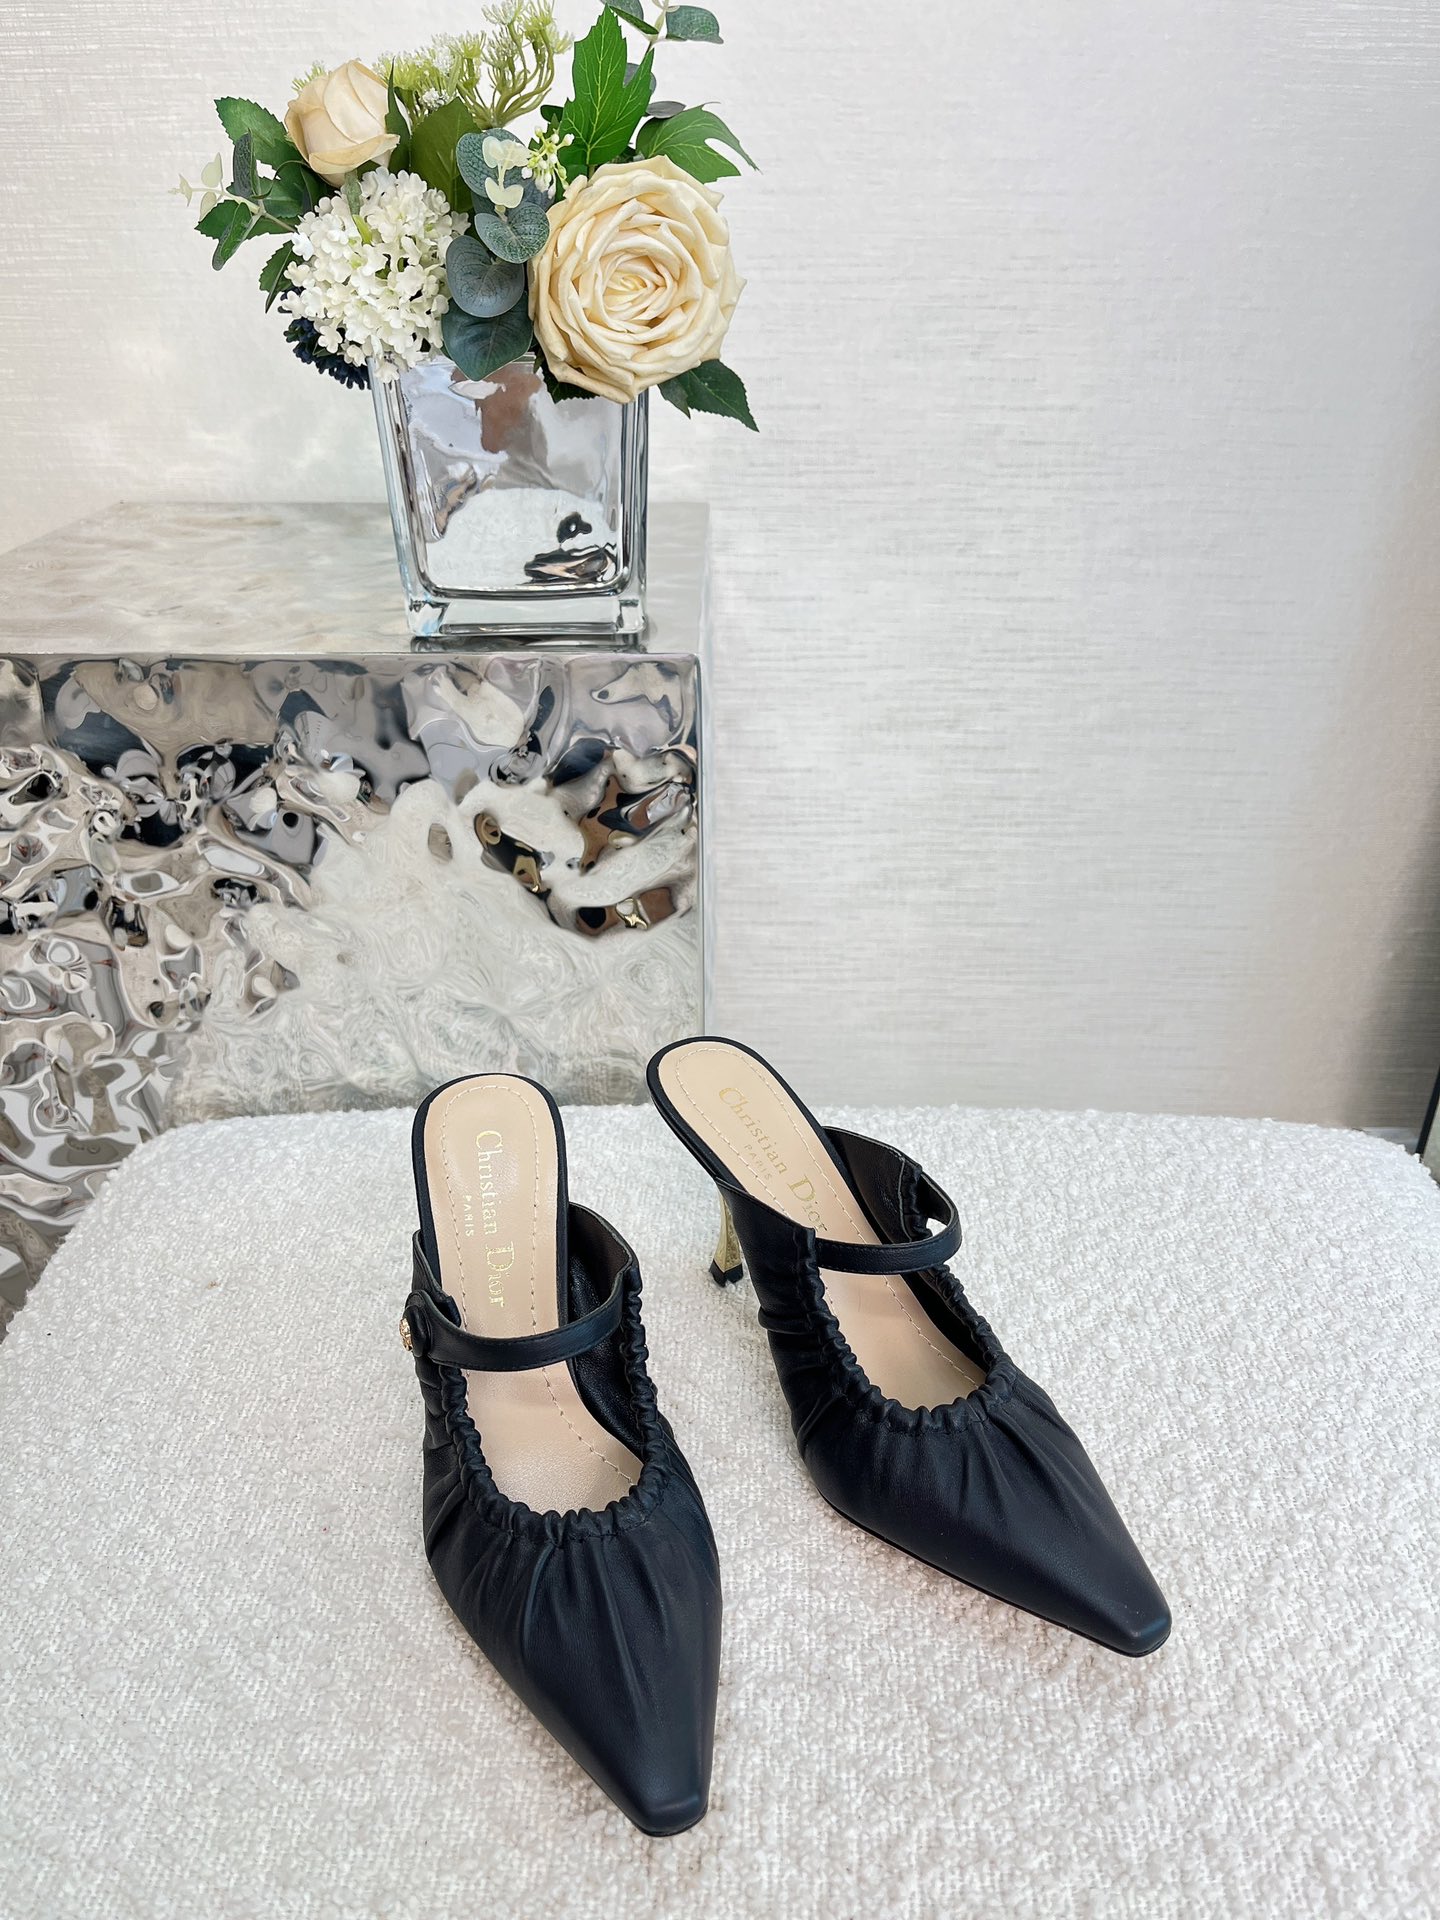 Dior Shoes High Heel Pumps Sandals Genuine Leather Sheepskin Spring/Summer Collection